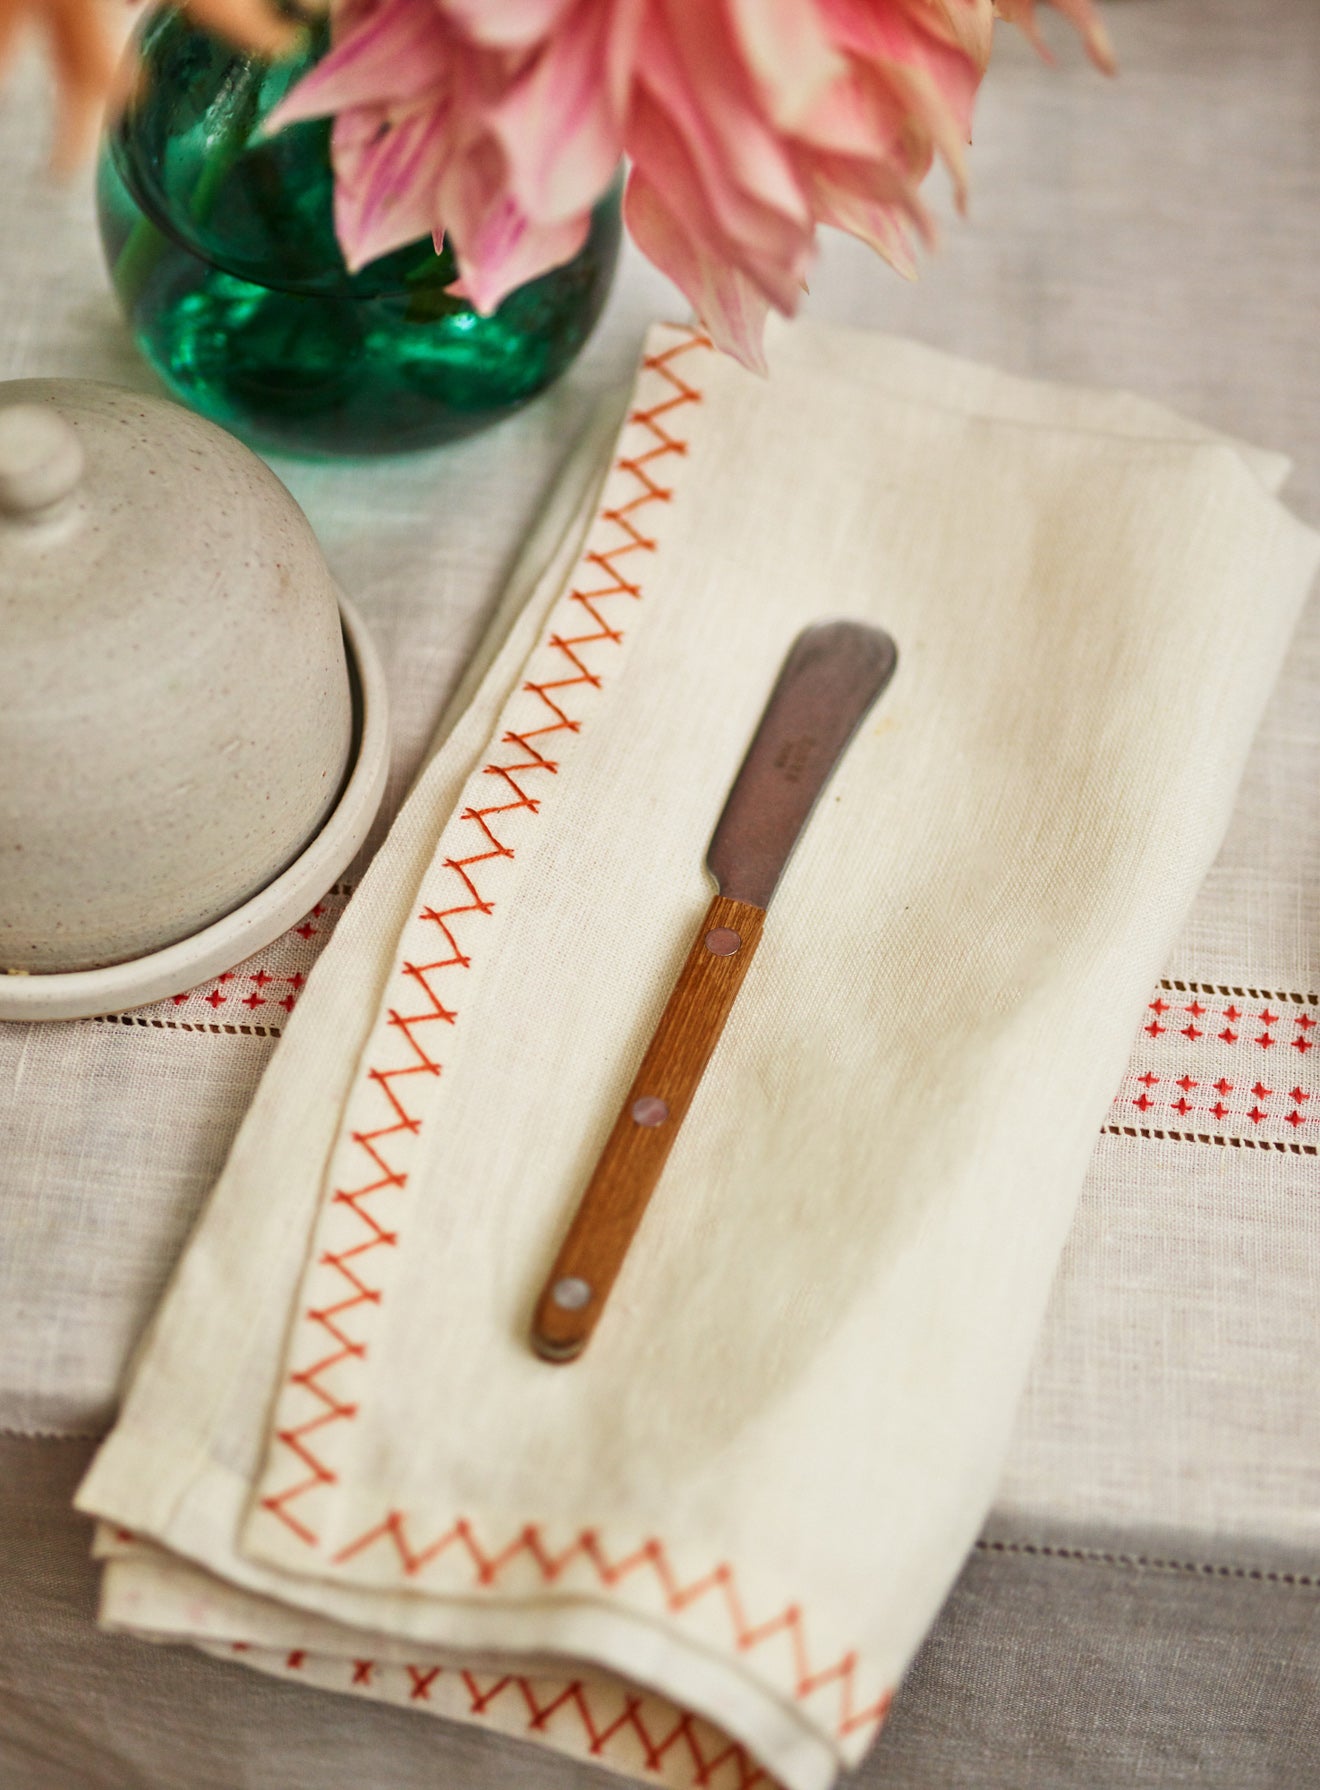 Vintage Wooden Cutlery, Butter Knife